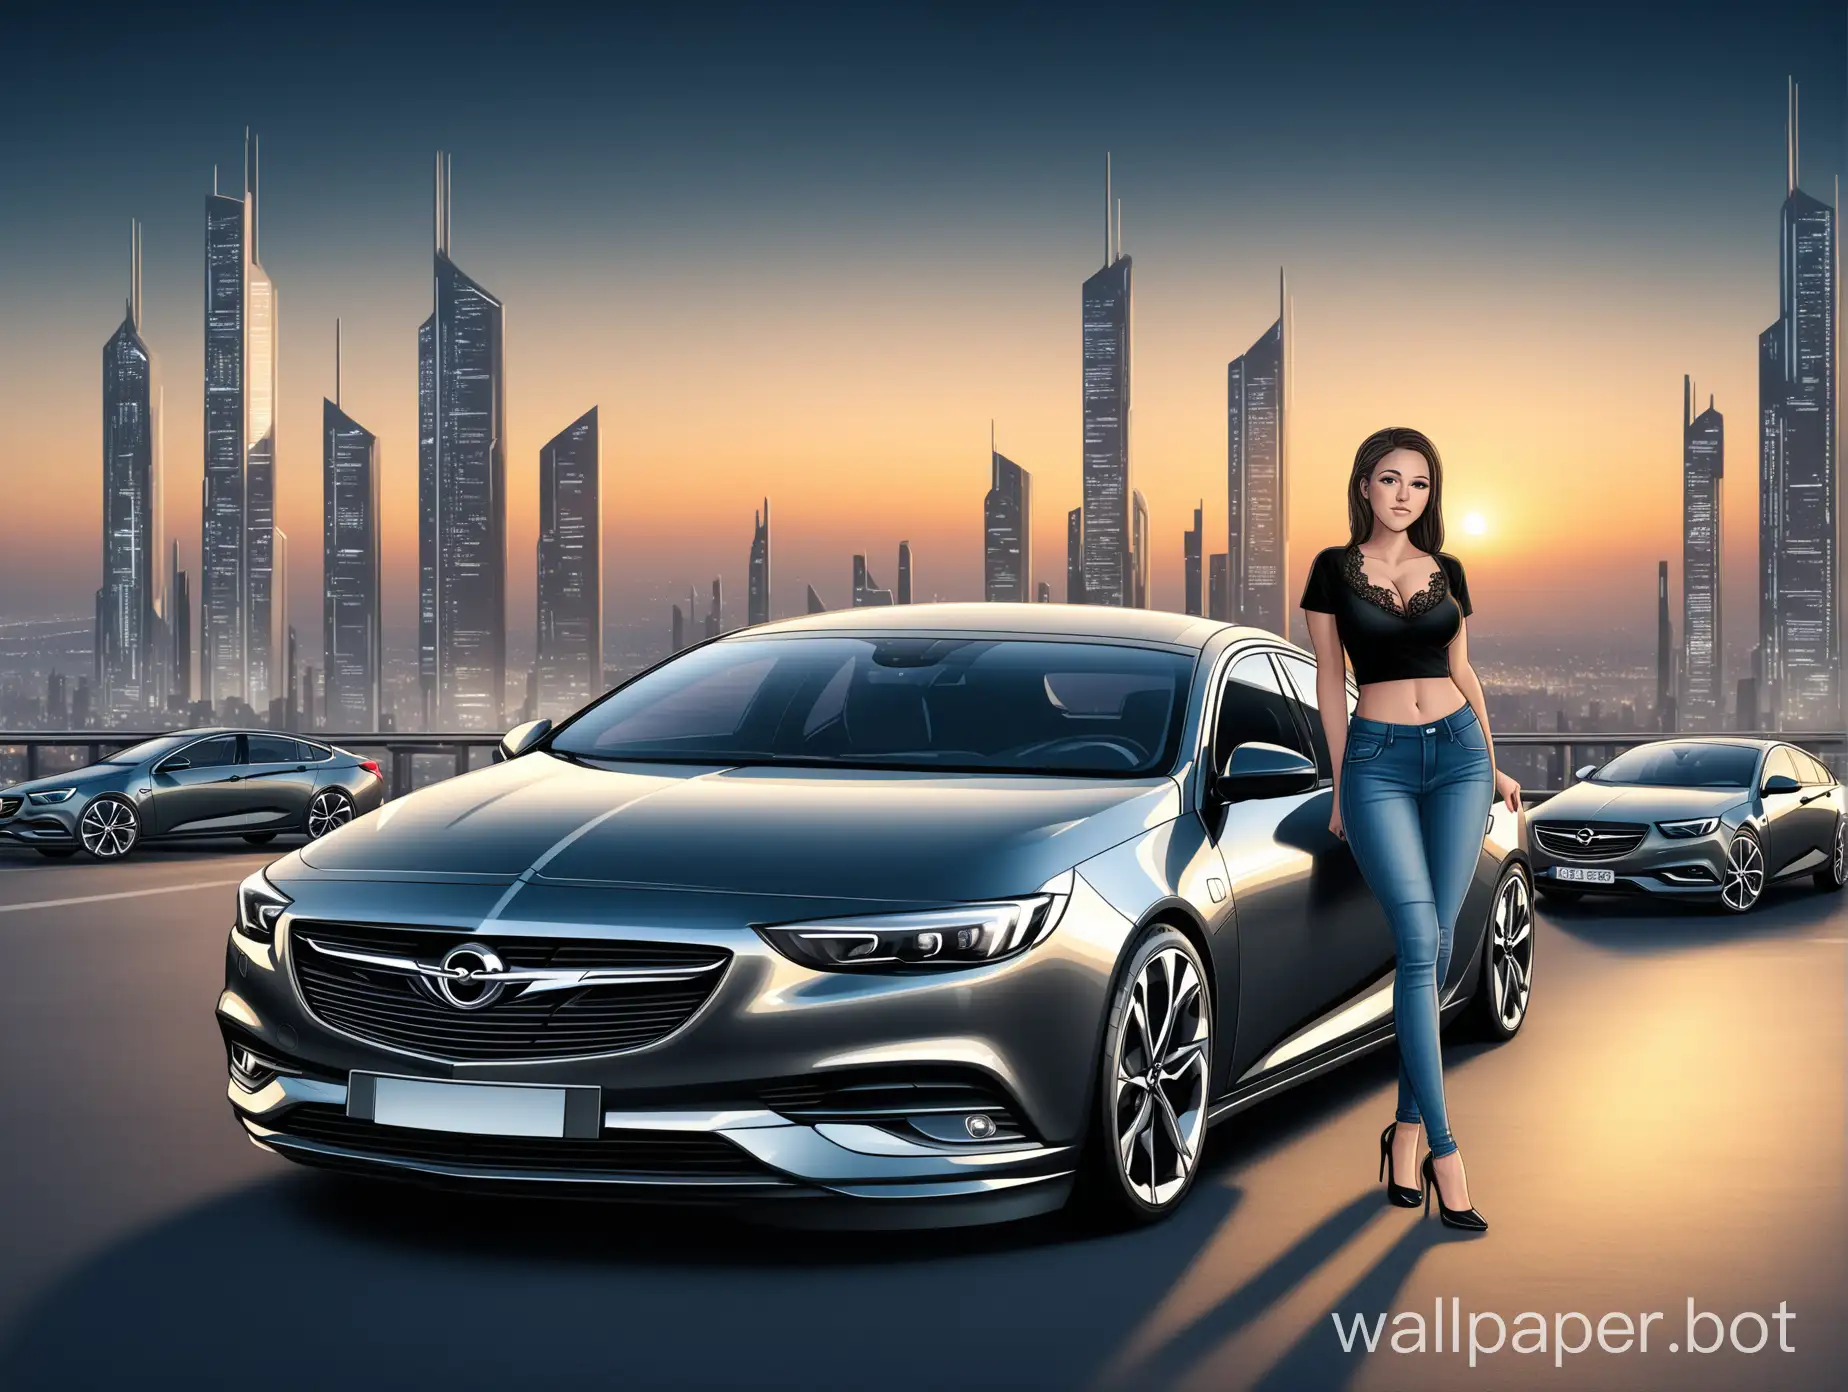 Brunette-Woman-Posing-Next-to-Opel-Insignia-Grand-Sport-Car-in-Futuristic-City-at-Sundown